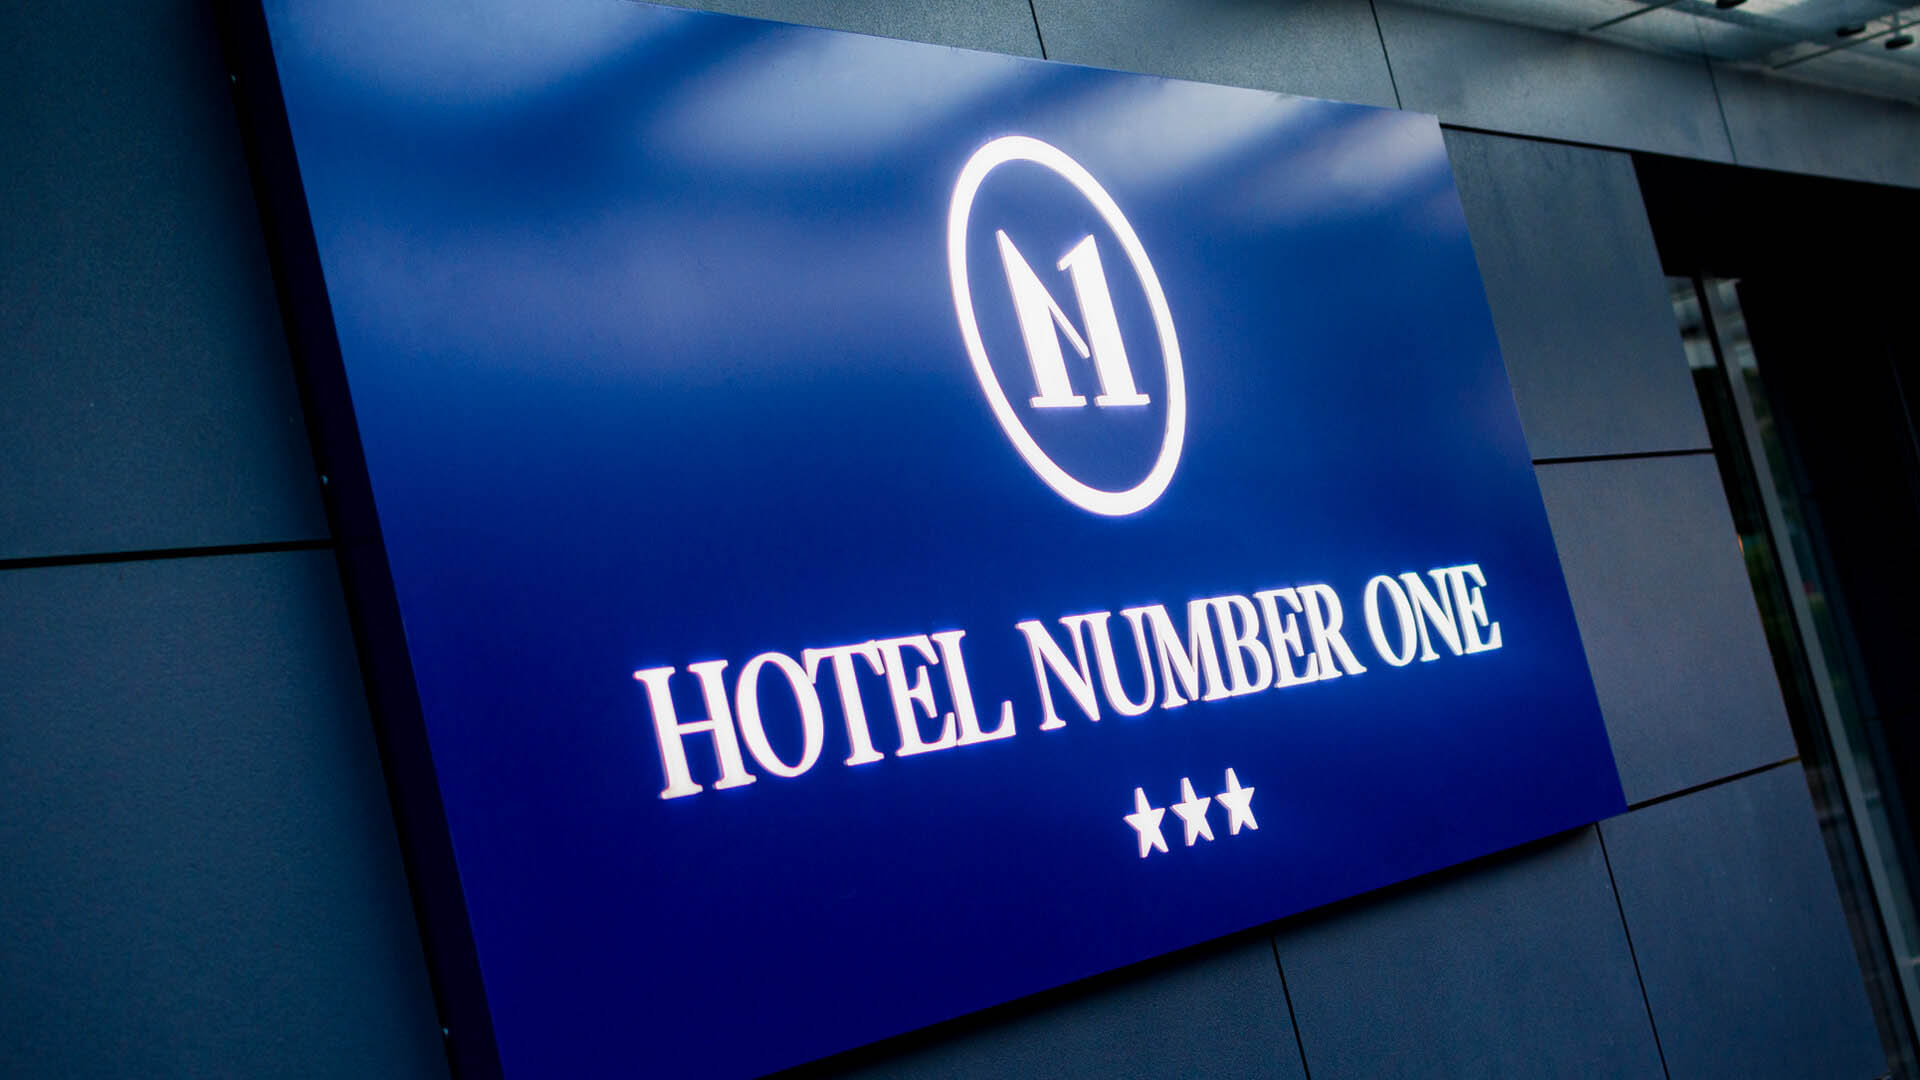 Hotel Number 1 - Hotel Number 1 - Spatial lettering on lightbox